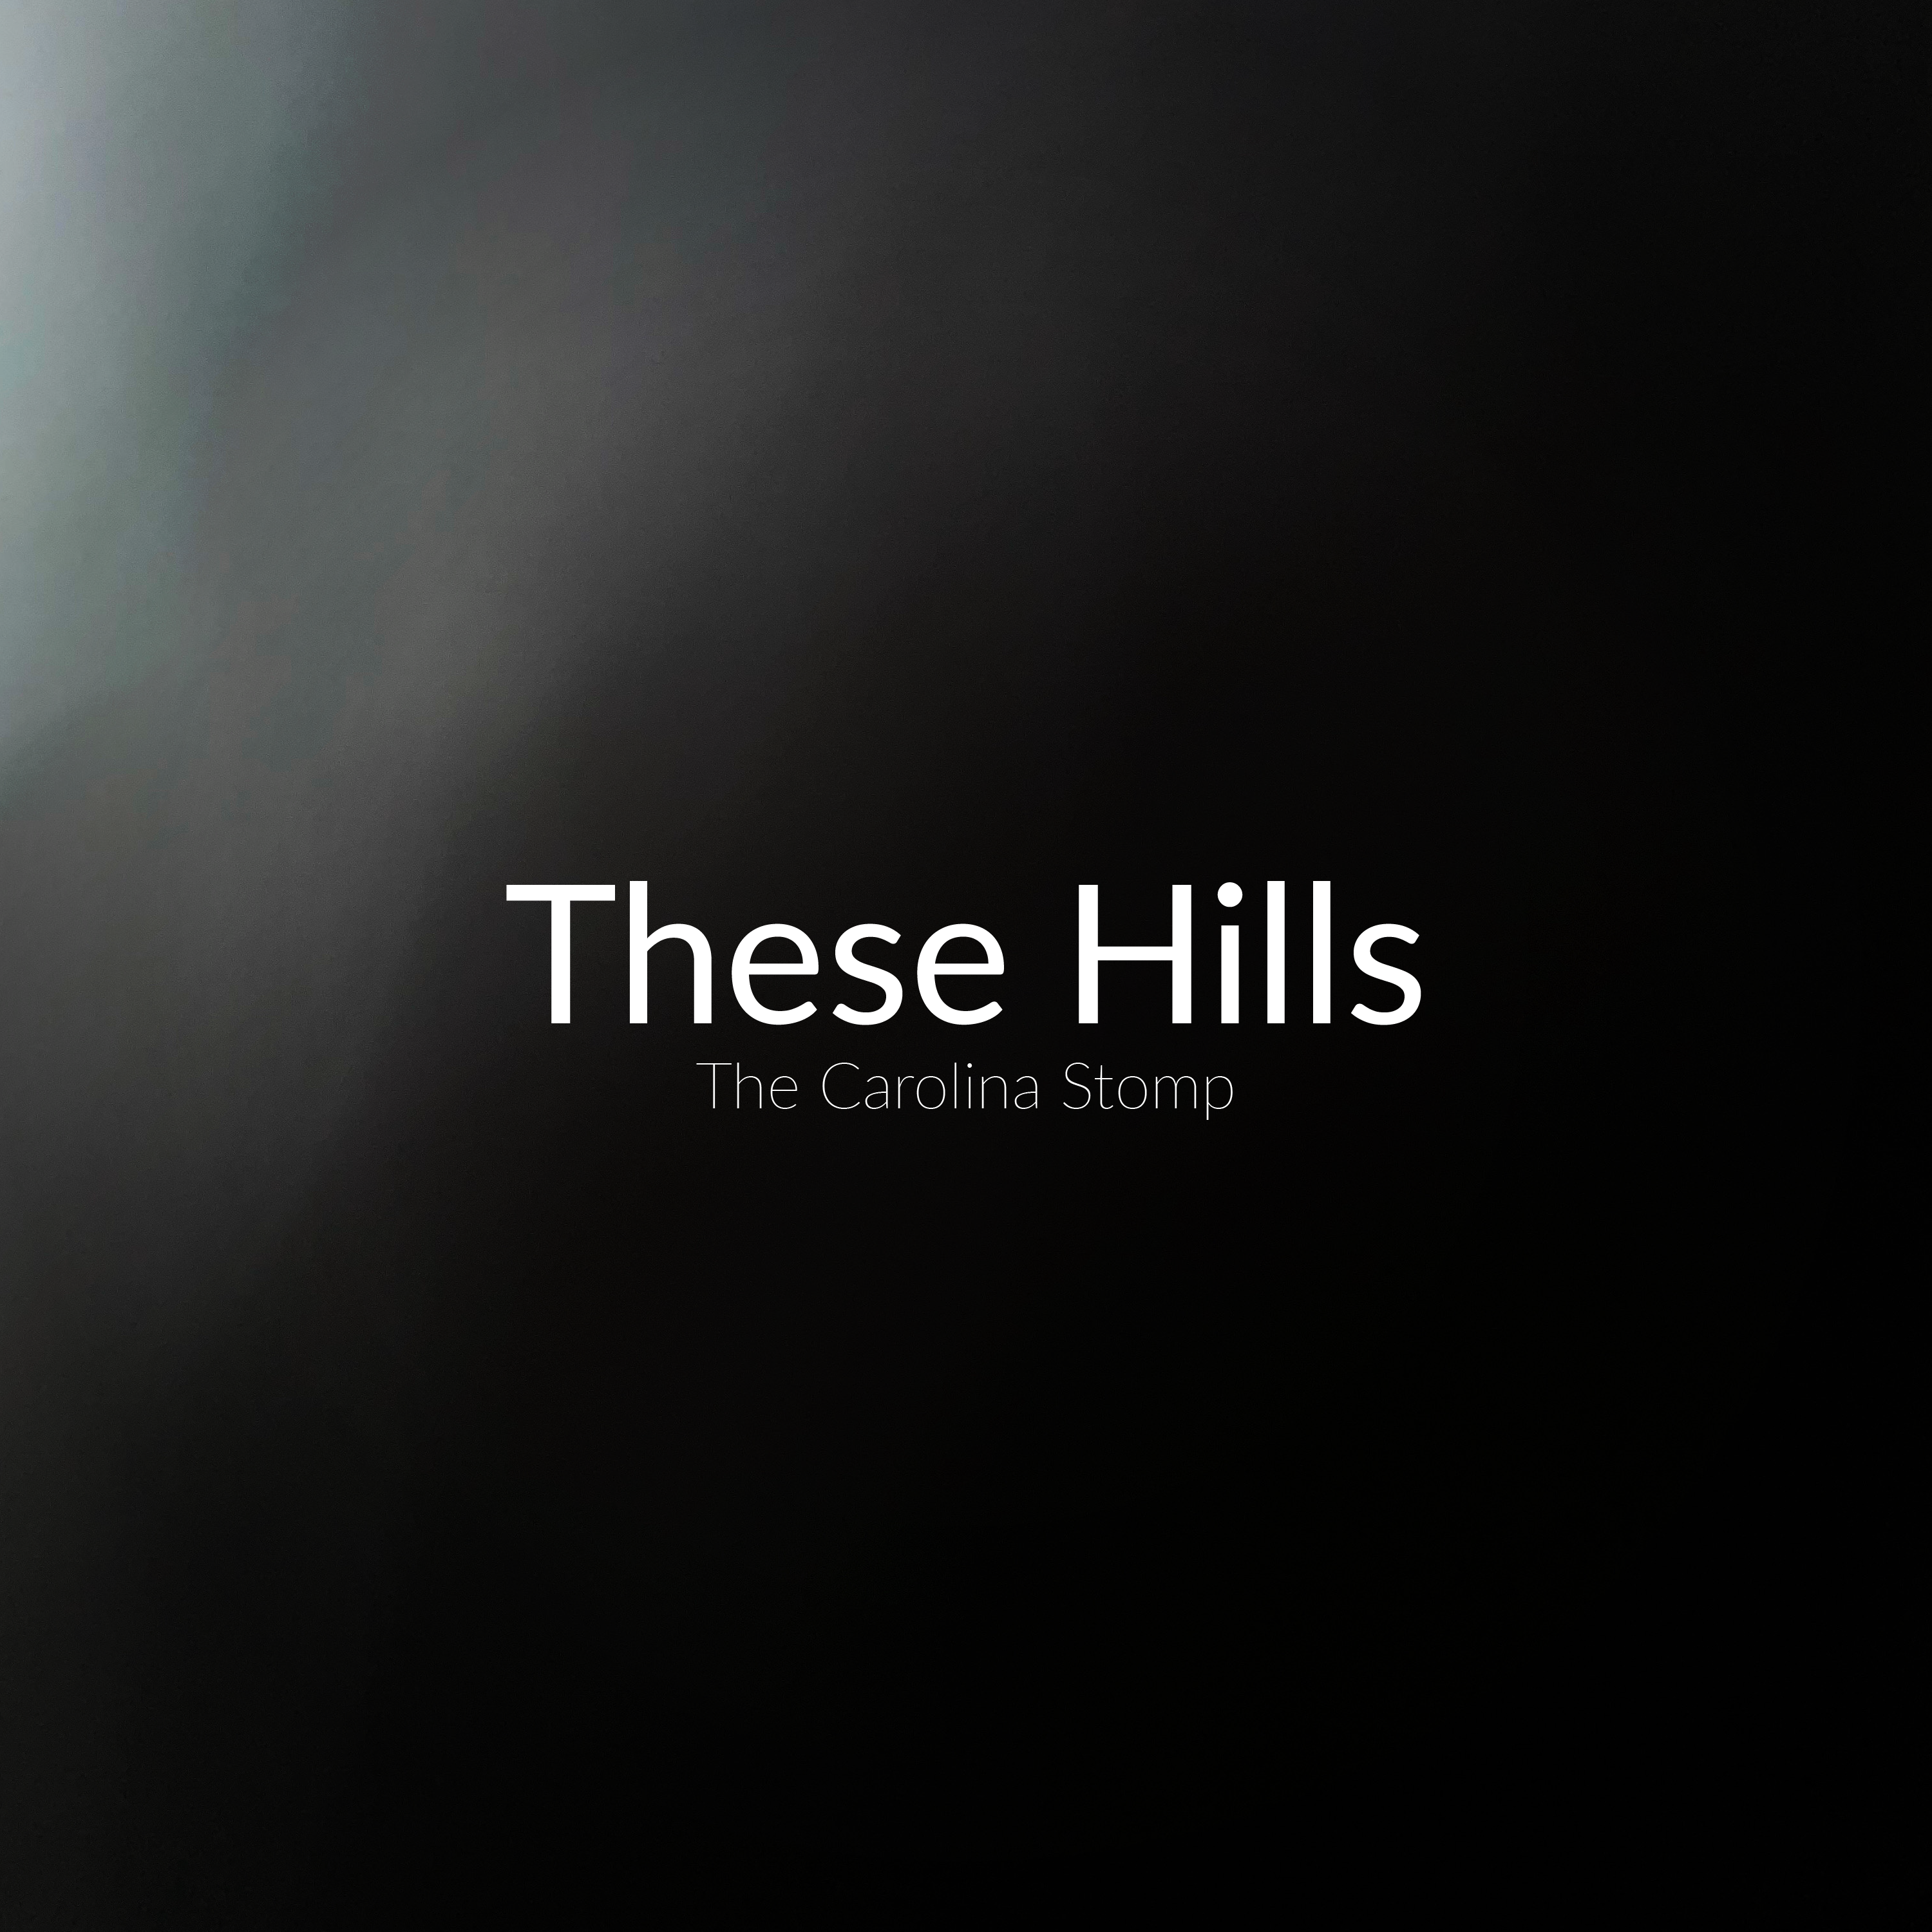 These Hills (The Carolina Stomp)